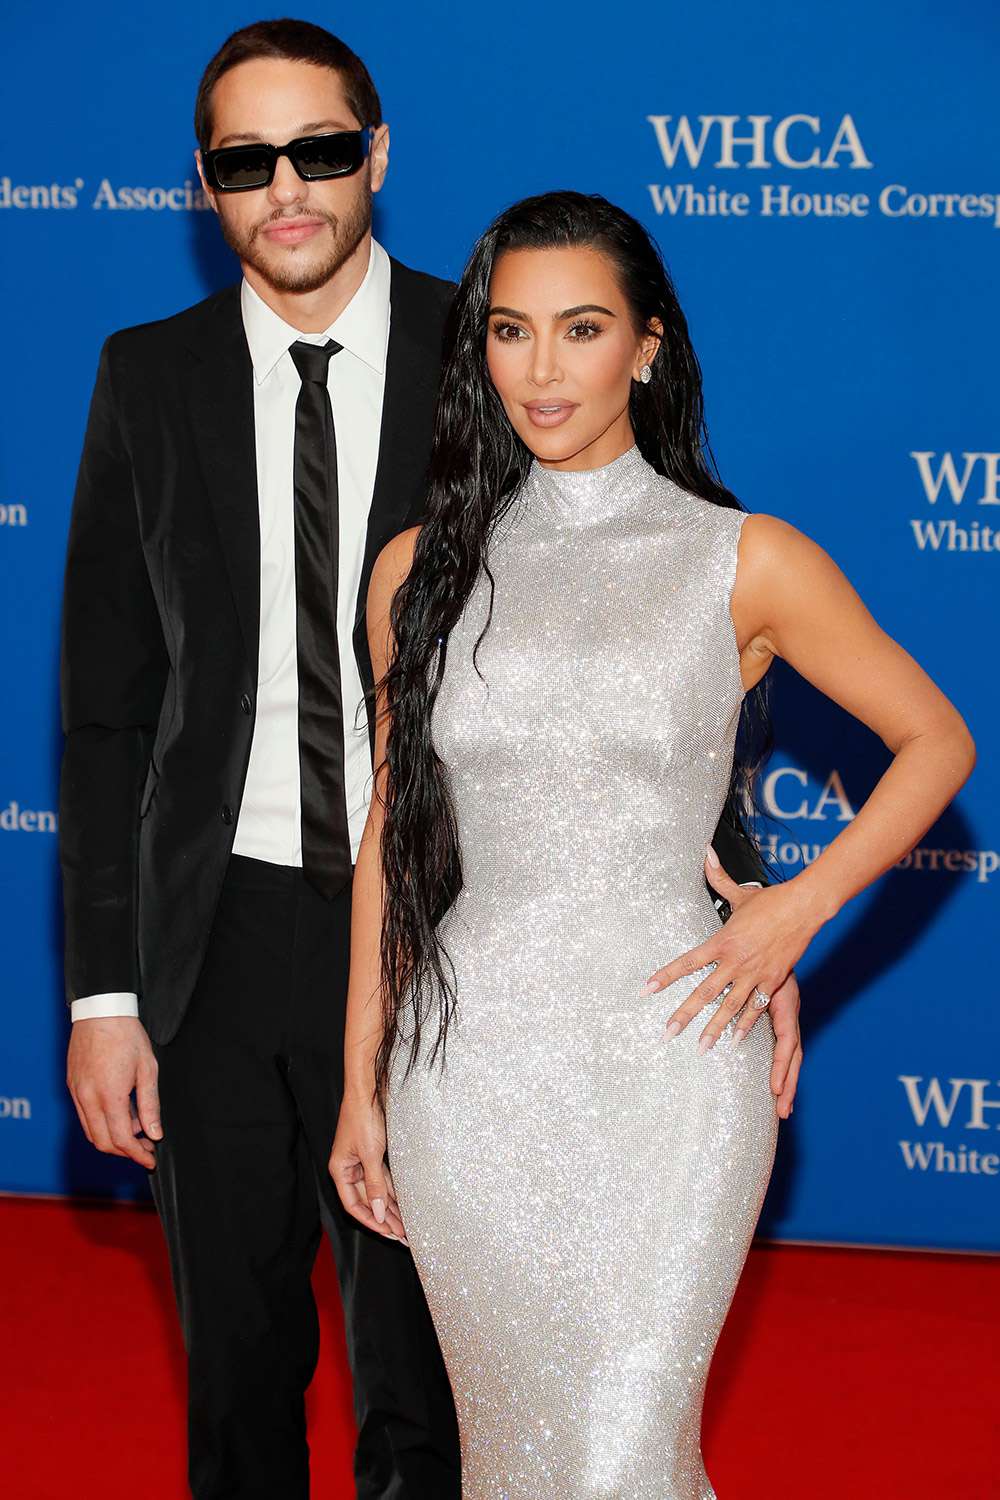 Kim Kardashian and Pete Davidson Attend White House Correspondents’ Dinner Together